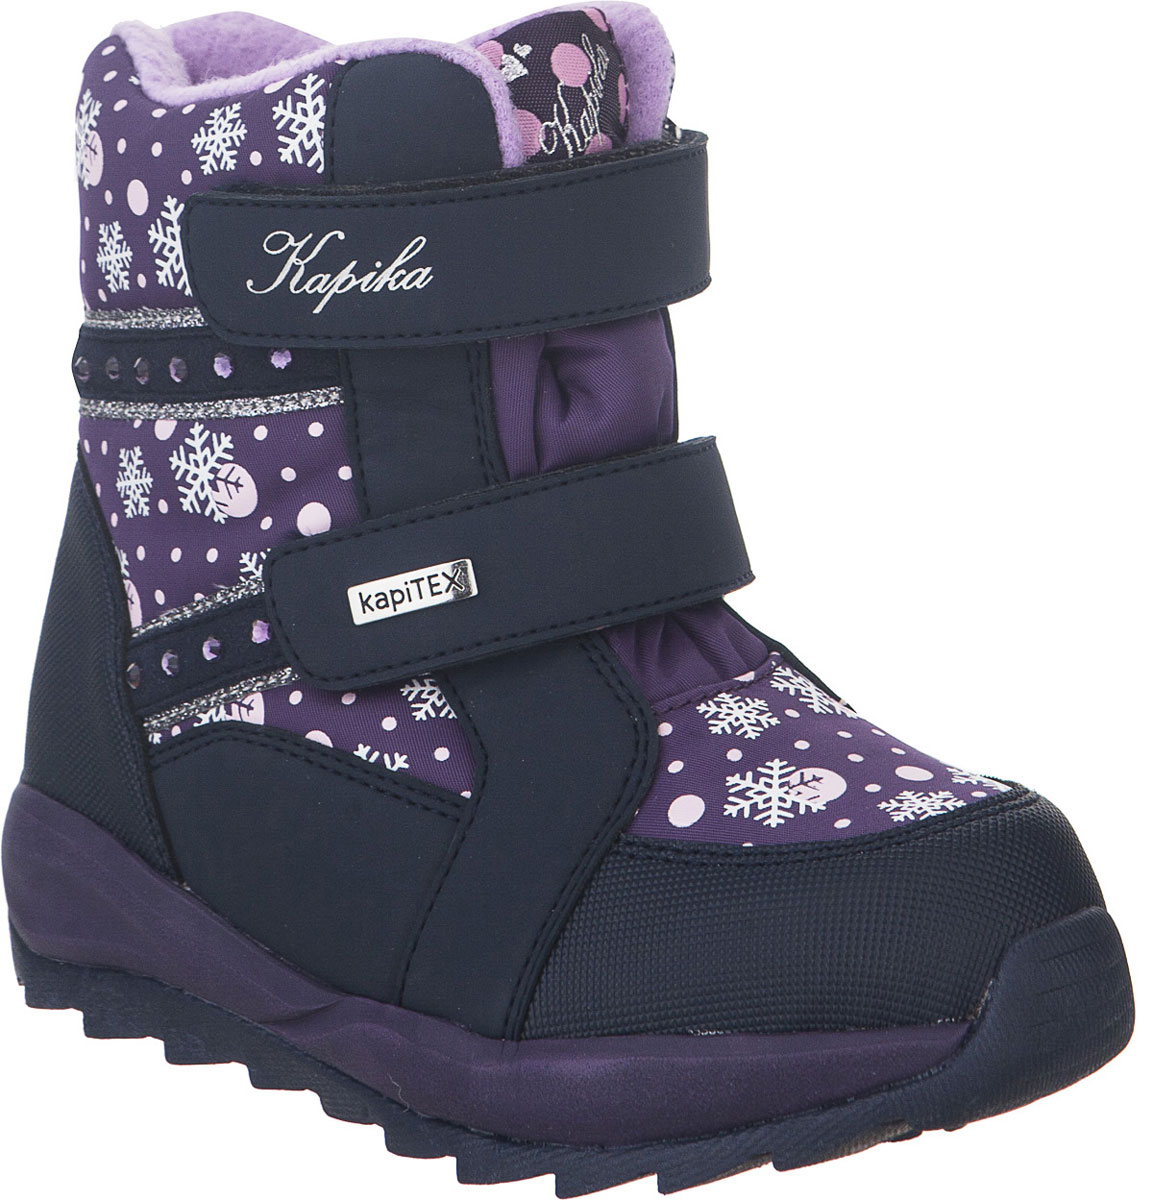 Ботинки для девочки Kapika, цвет: фиолетовый, темно-синий. 42240-2. Размер 32